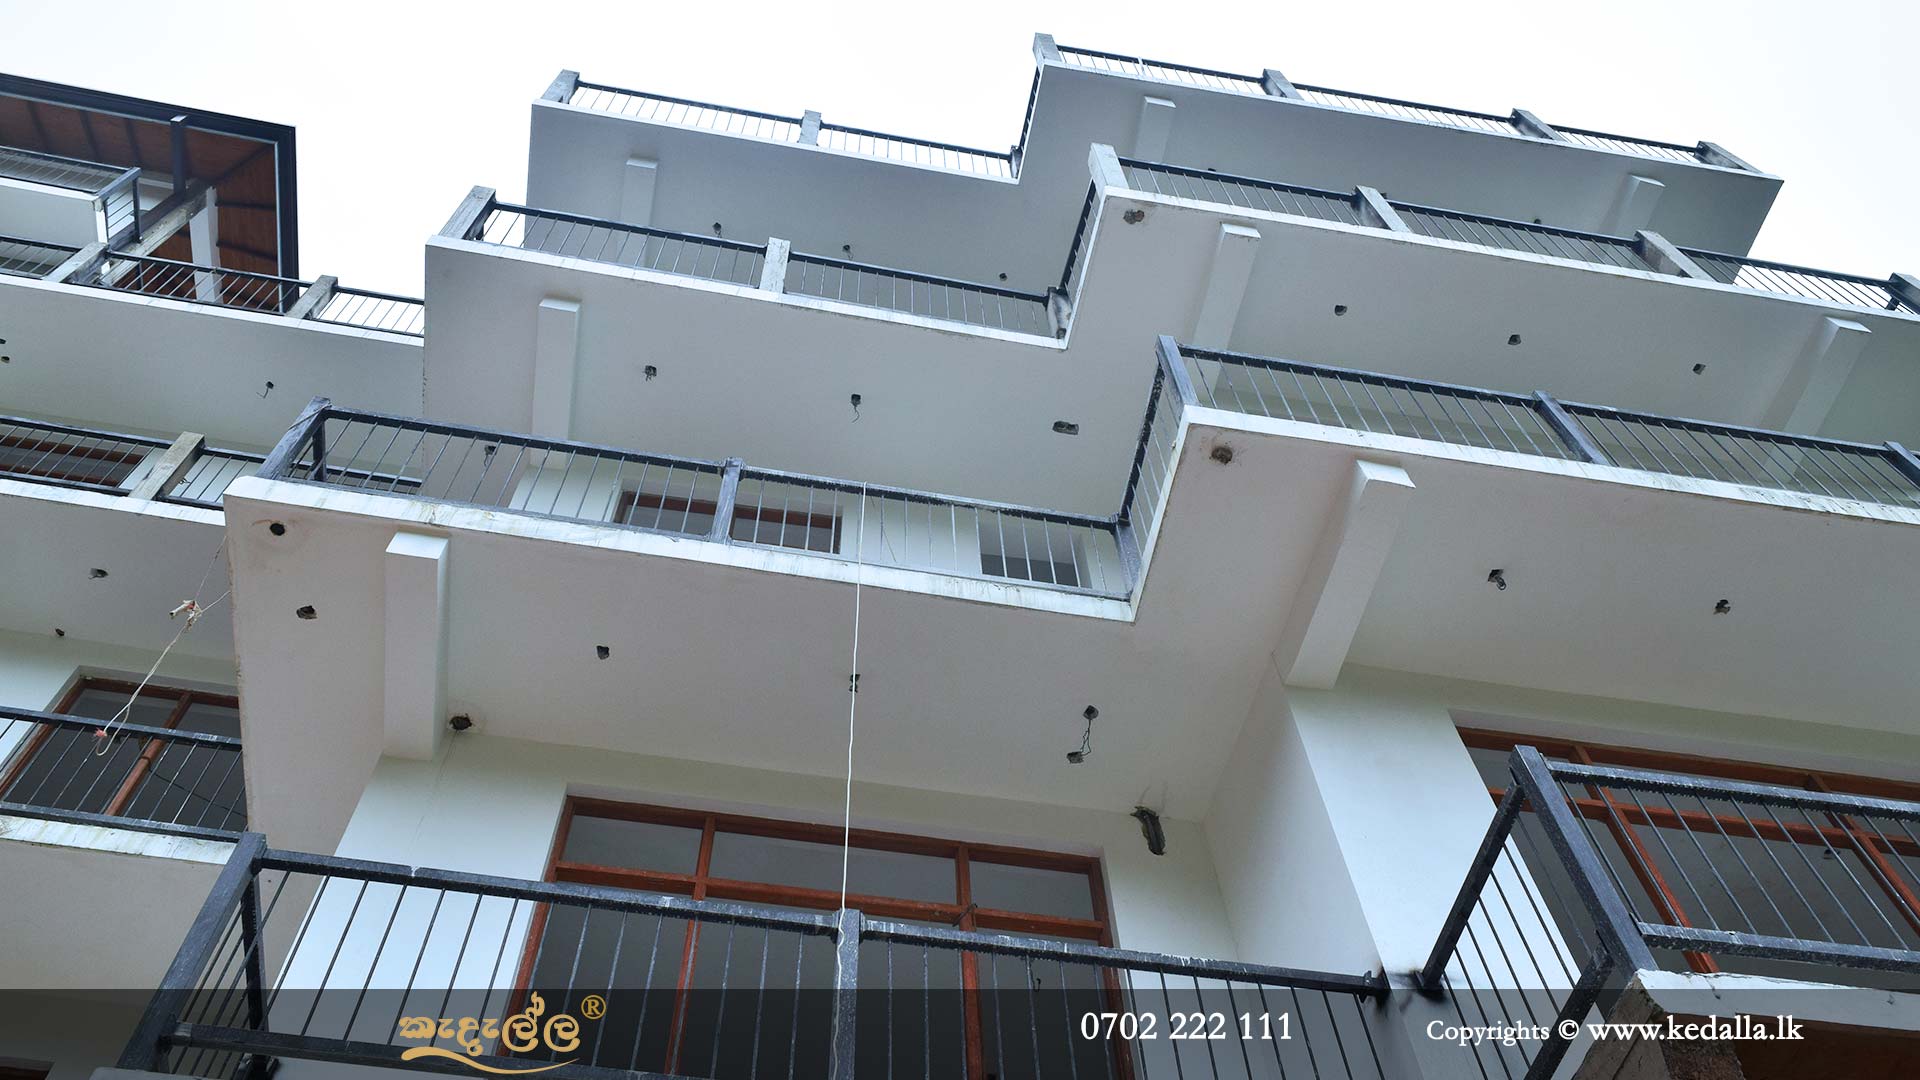 Luxury multy story box model house construction by Modern House Builders in Kandy Sri Lanka